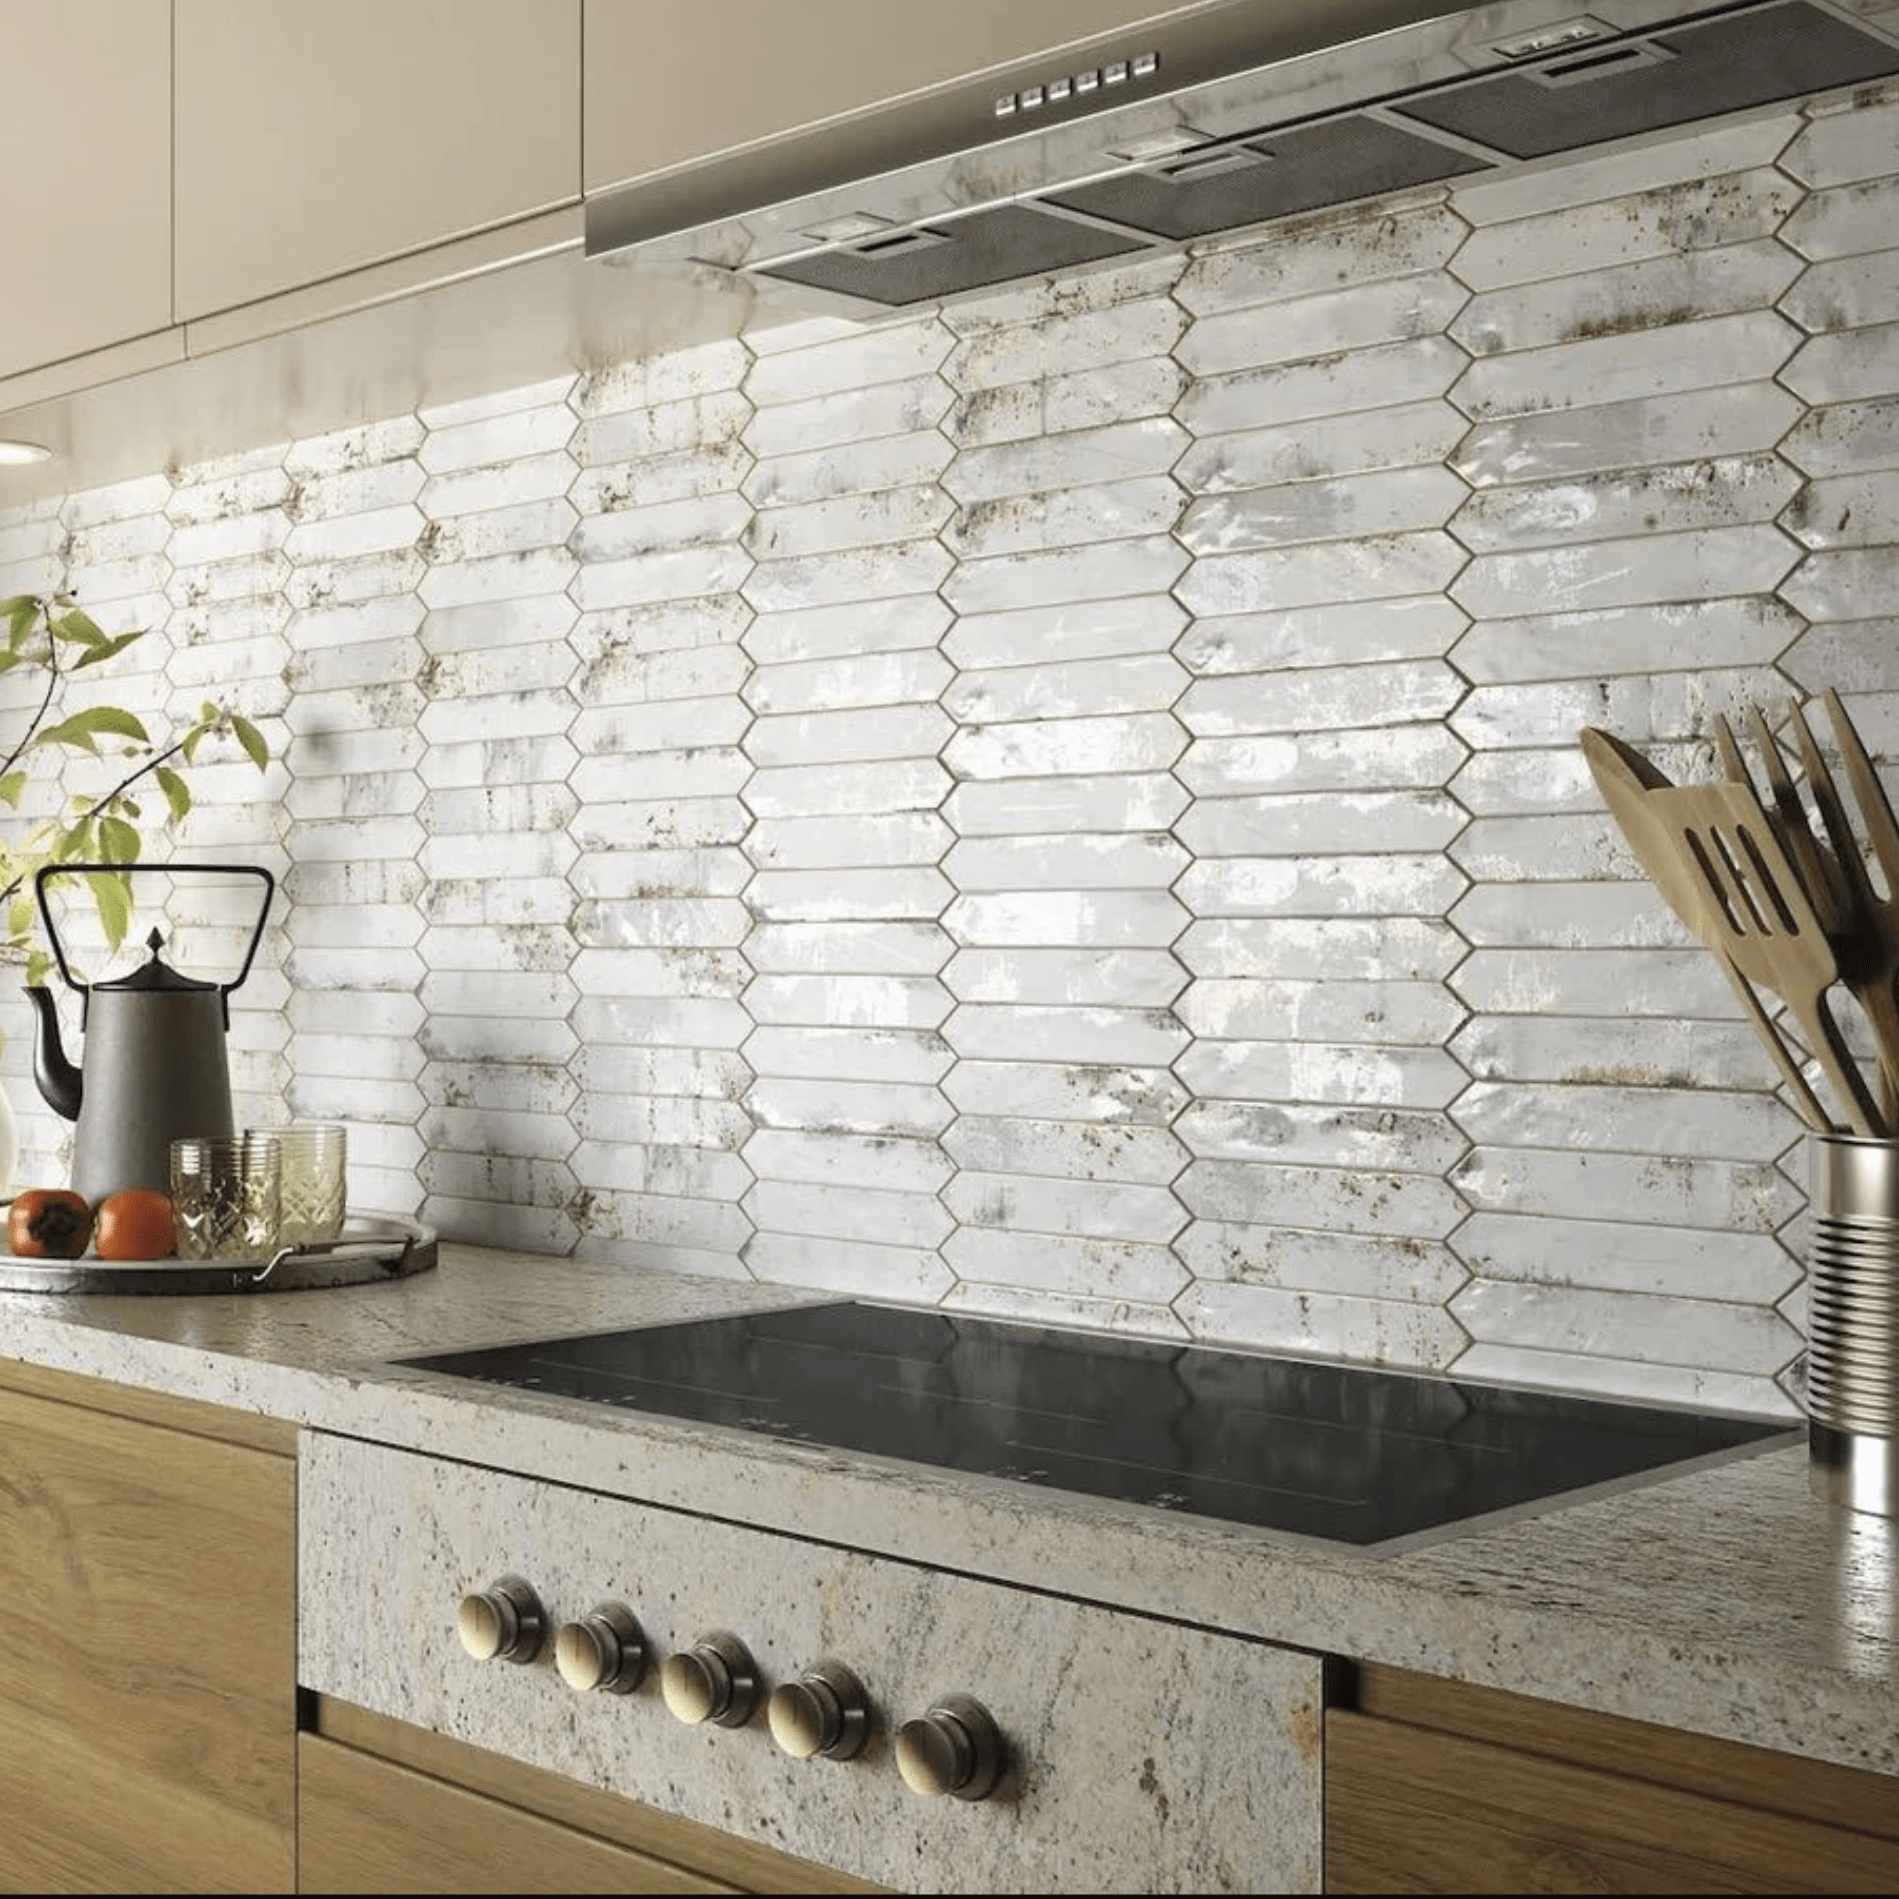 Range idea  Trendy kitchen backsplash, Kitchen backsplash tile designs,  Kitchen backsplash designs